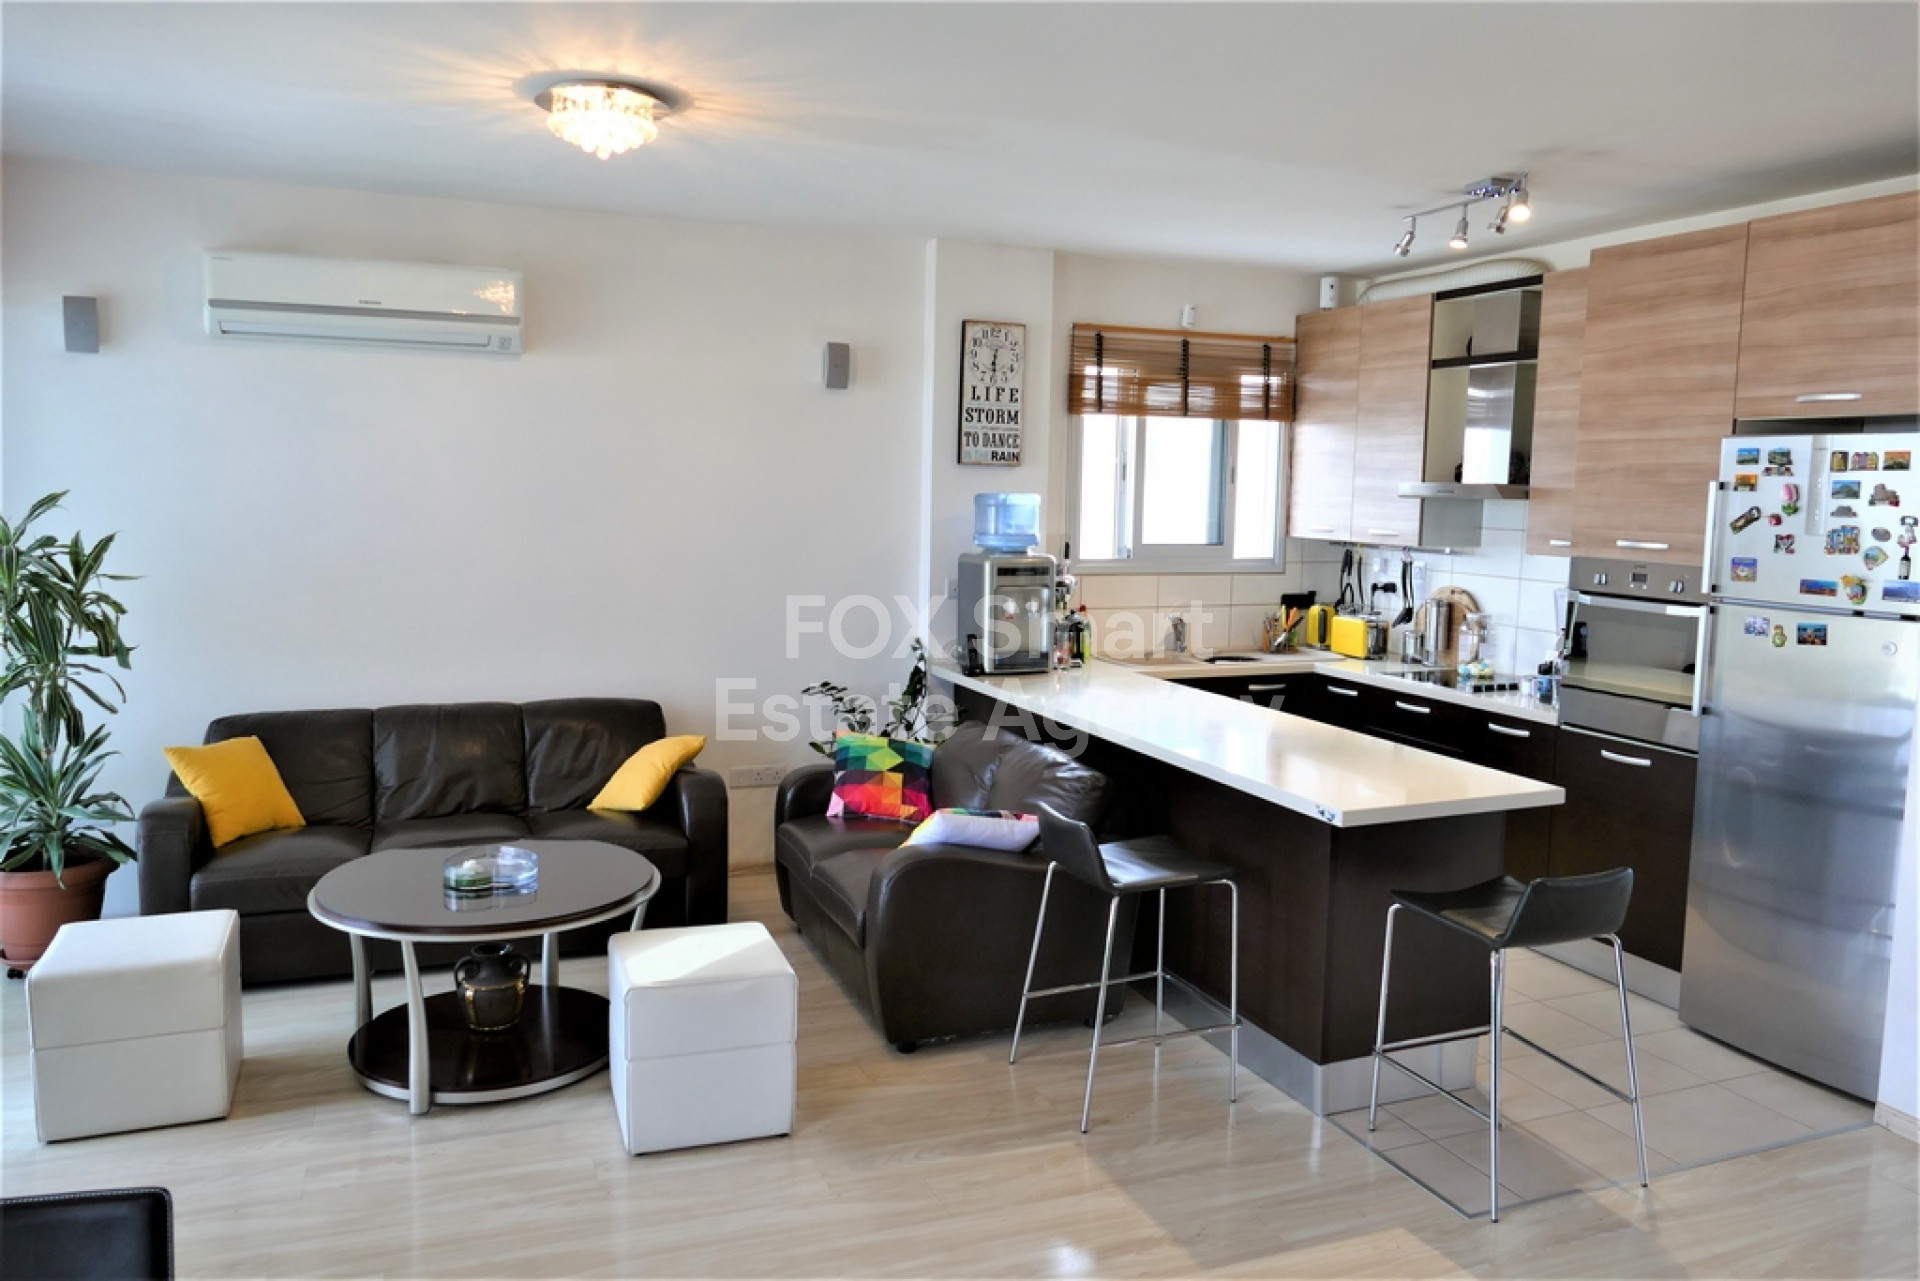 Apartment, For Sale, Nicosia, Strovolos, Acropolis  2 Bedroo.....